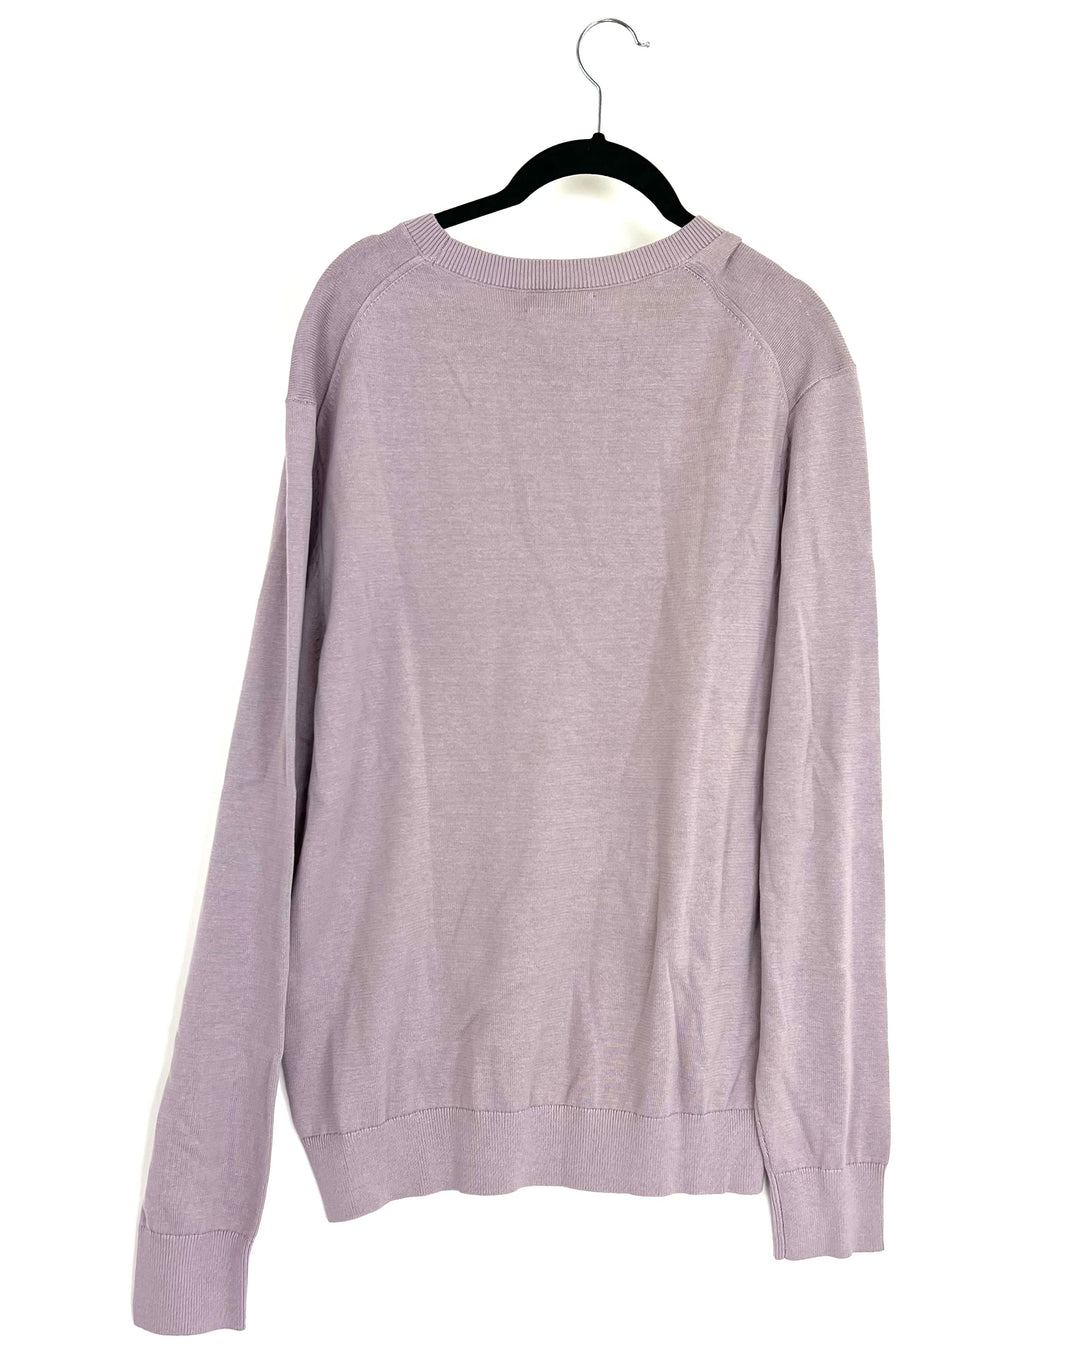 MENS Light Purple Sweater - Medium